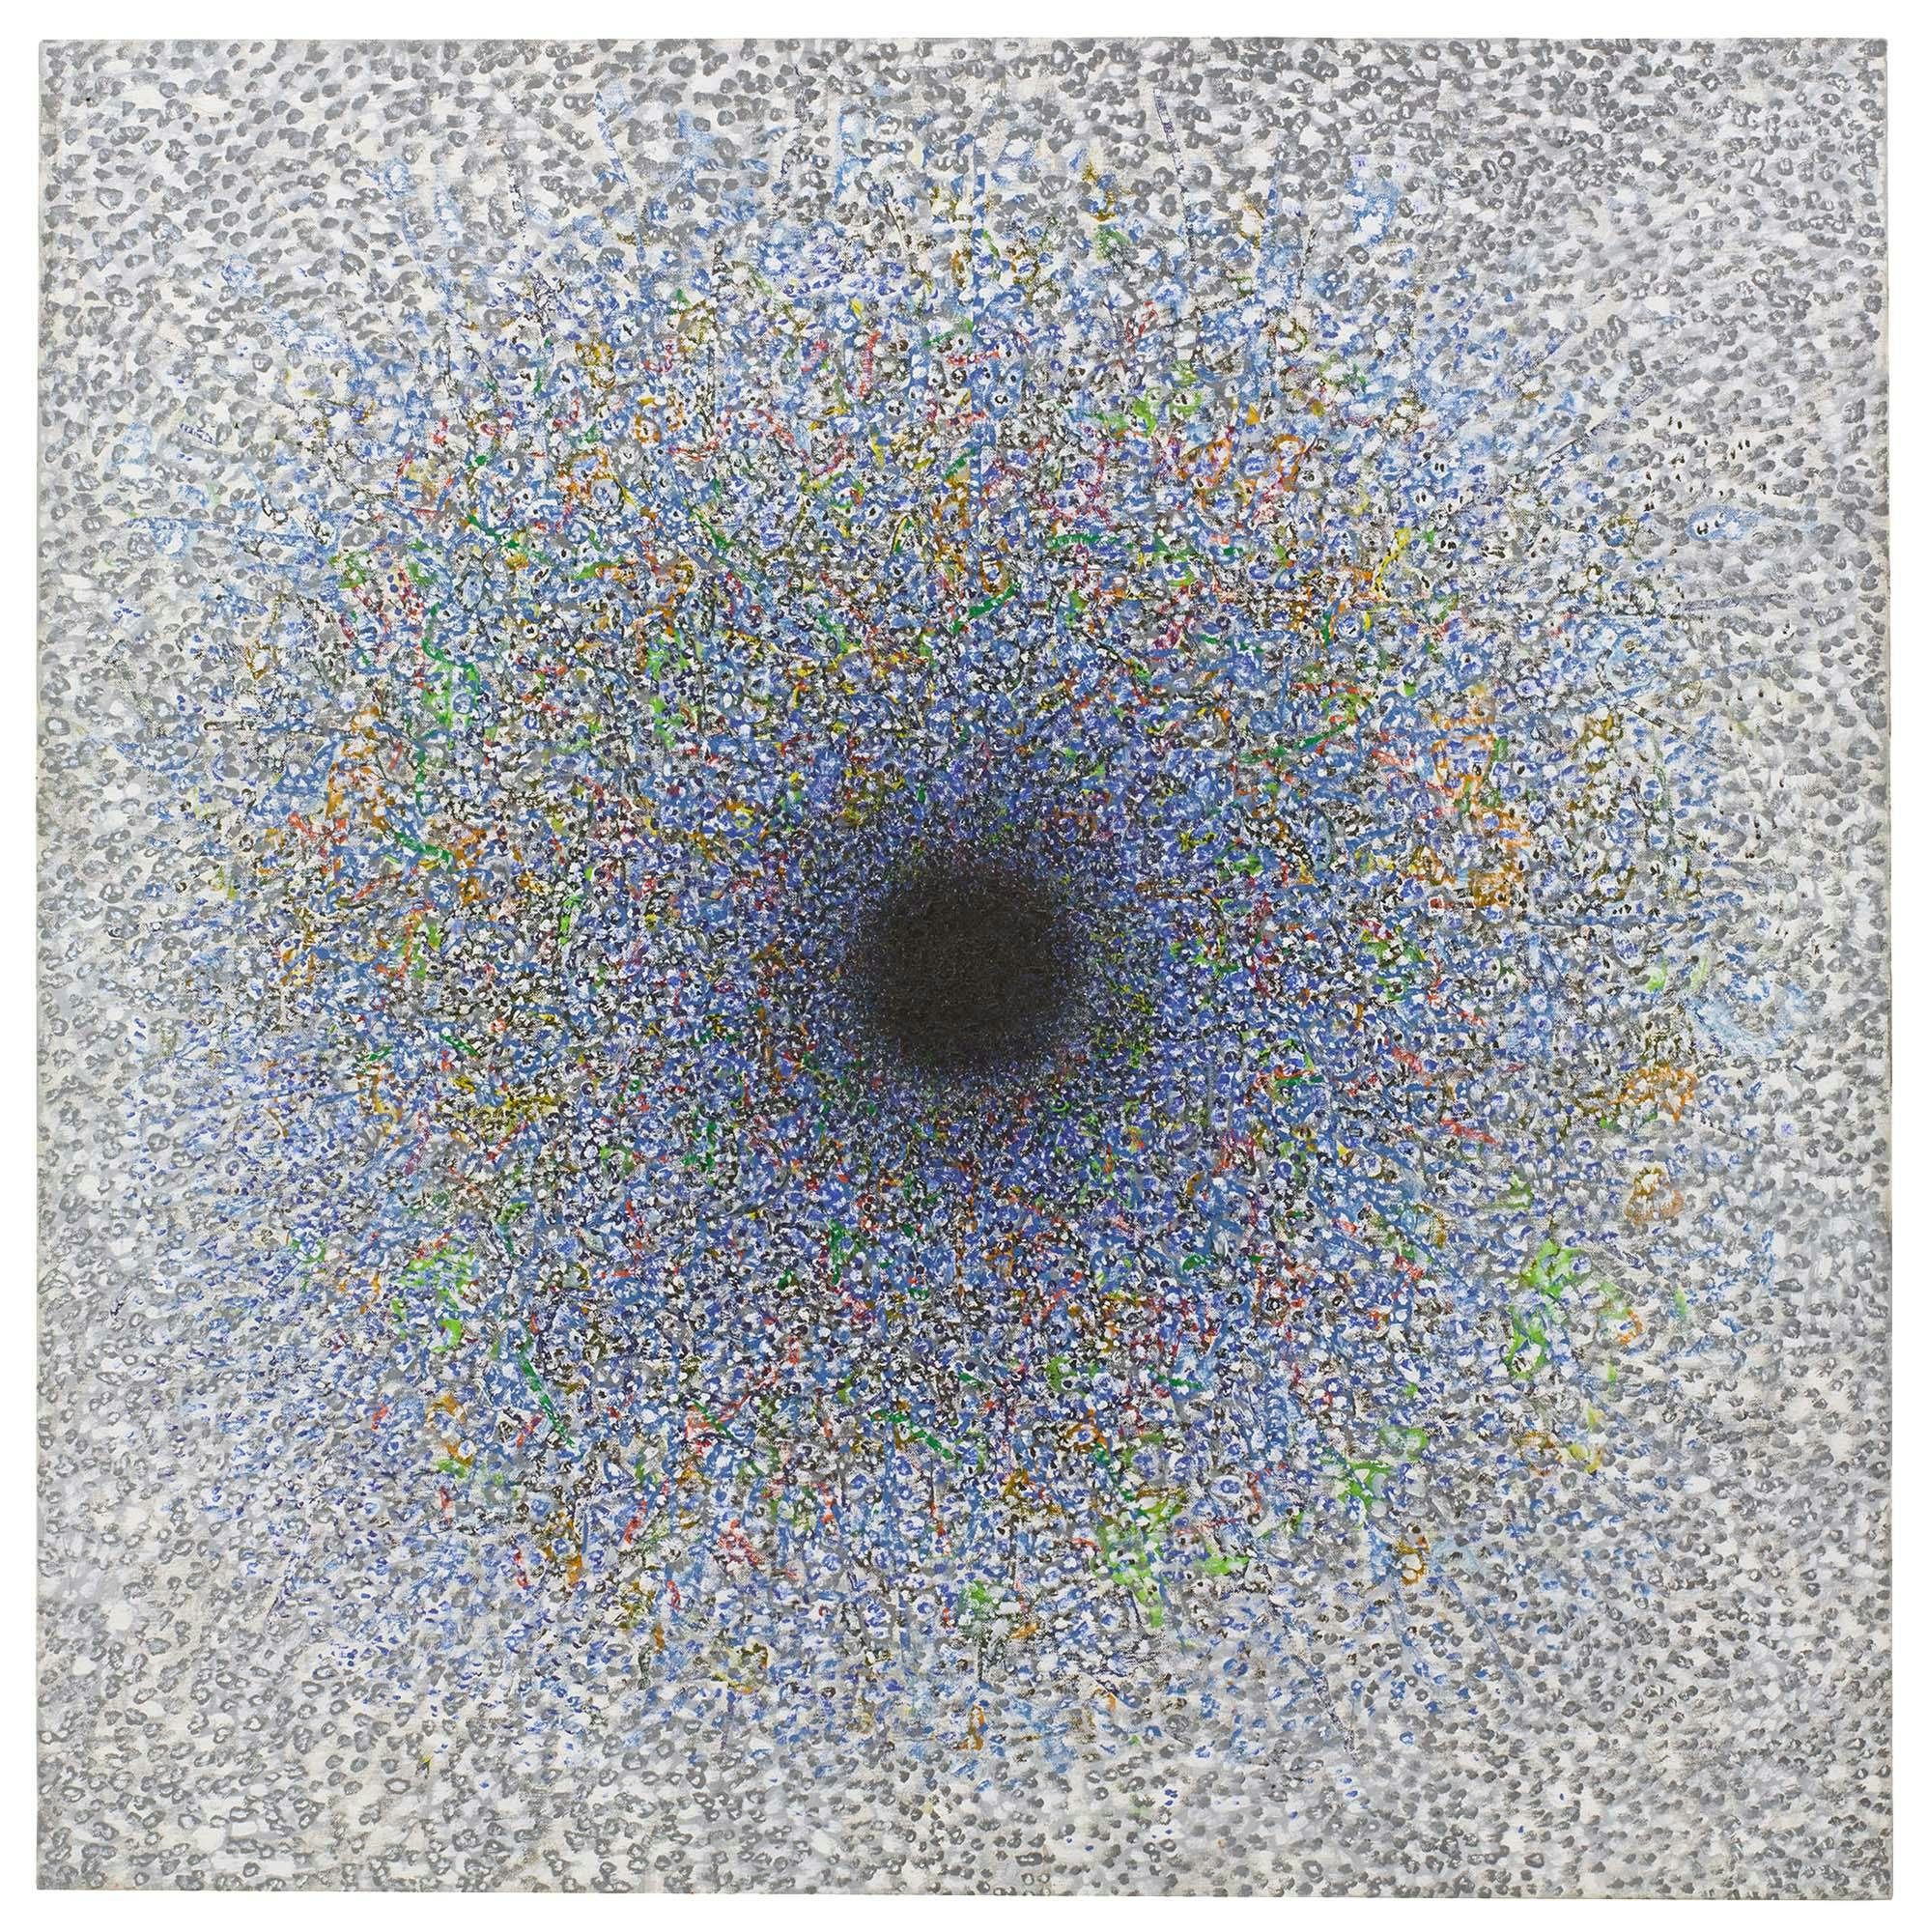 Imploding Black
1985–86
Acrylic on linen
72 x 72 in. (182.9 x 182.9 cm)
 – The Richard Pousette-Dart Foundation